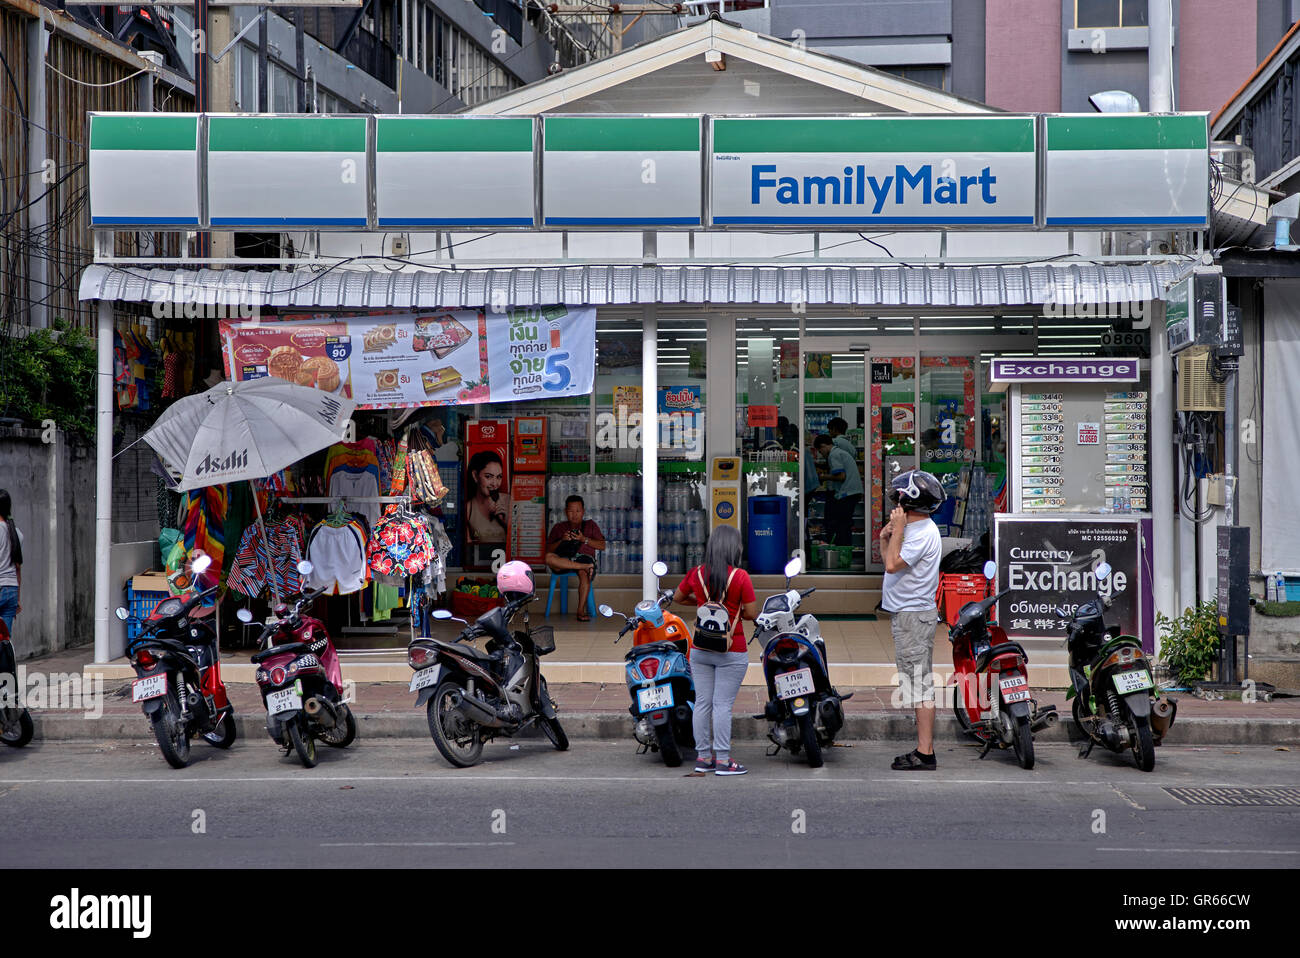 Family Mart convenience store. Thailand S. E. Asia Stock Photo